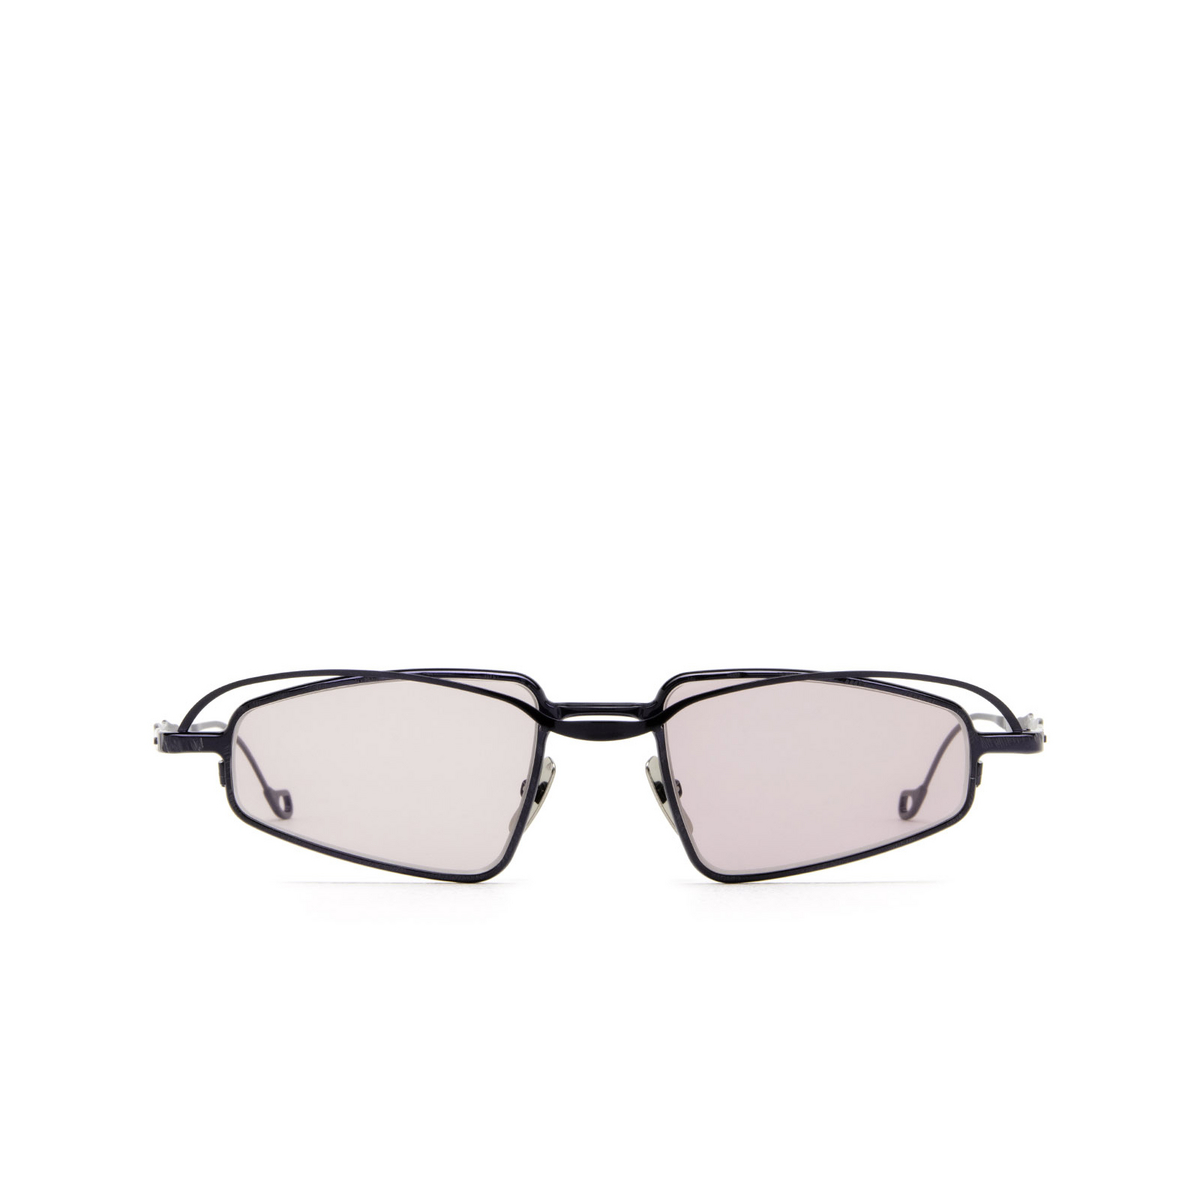 Kuboraum® Irregular Sunglasses: H73 color Metallic Blue Bl - front view.